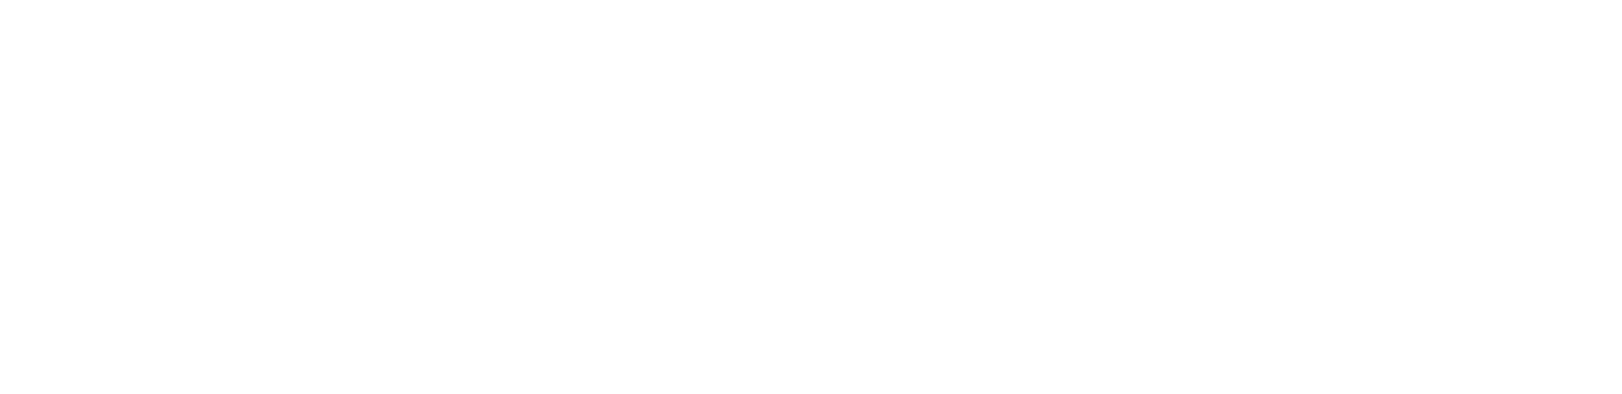 Taboola.com logo grand pour les fonds sombres (PNG transparent)